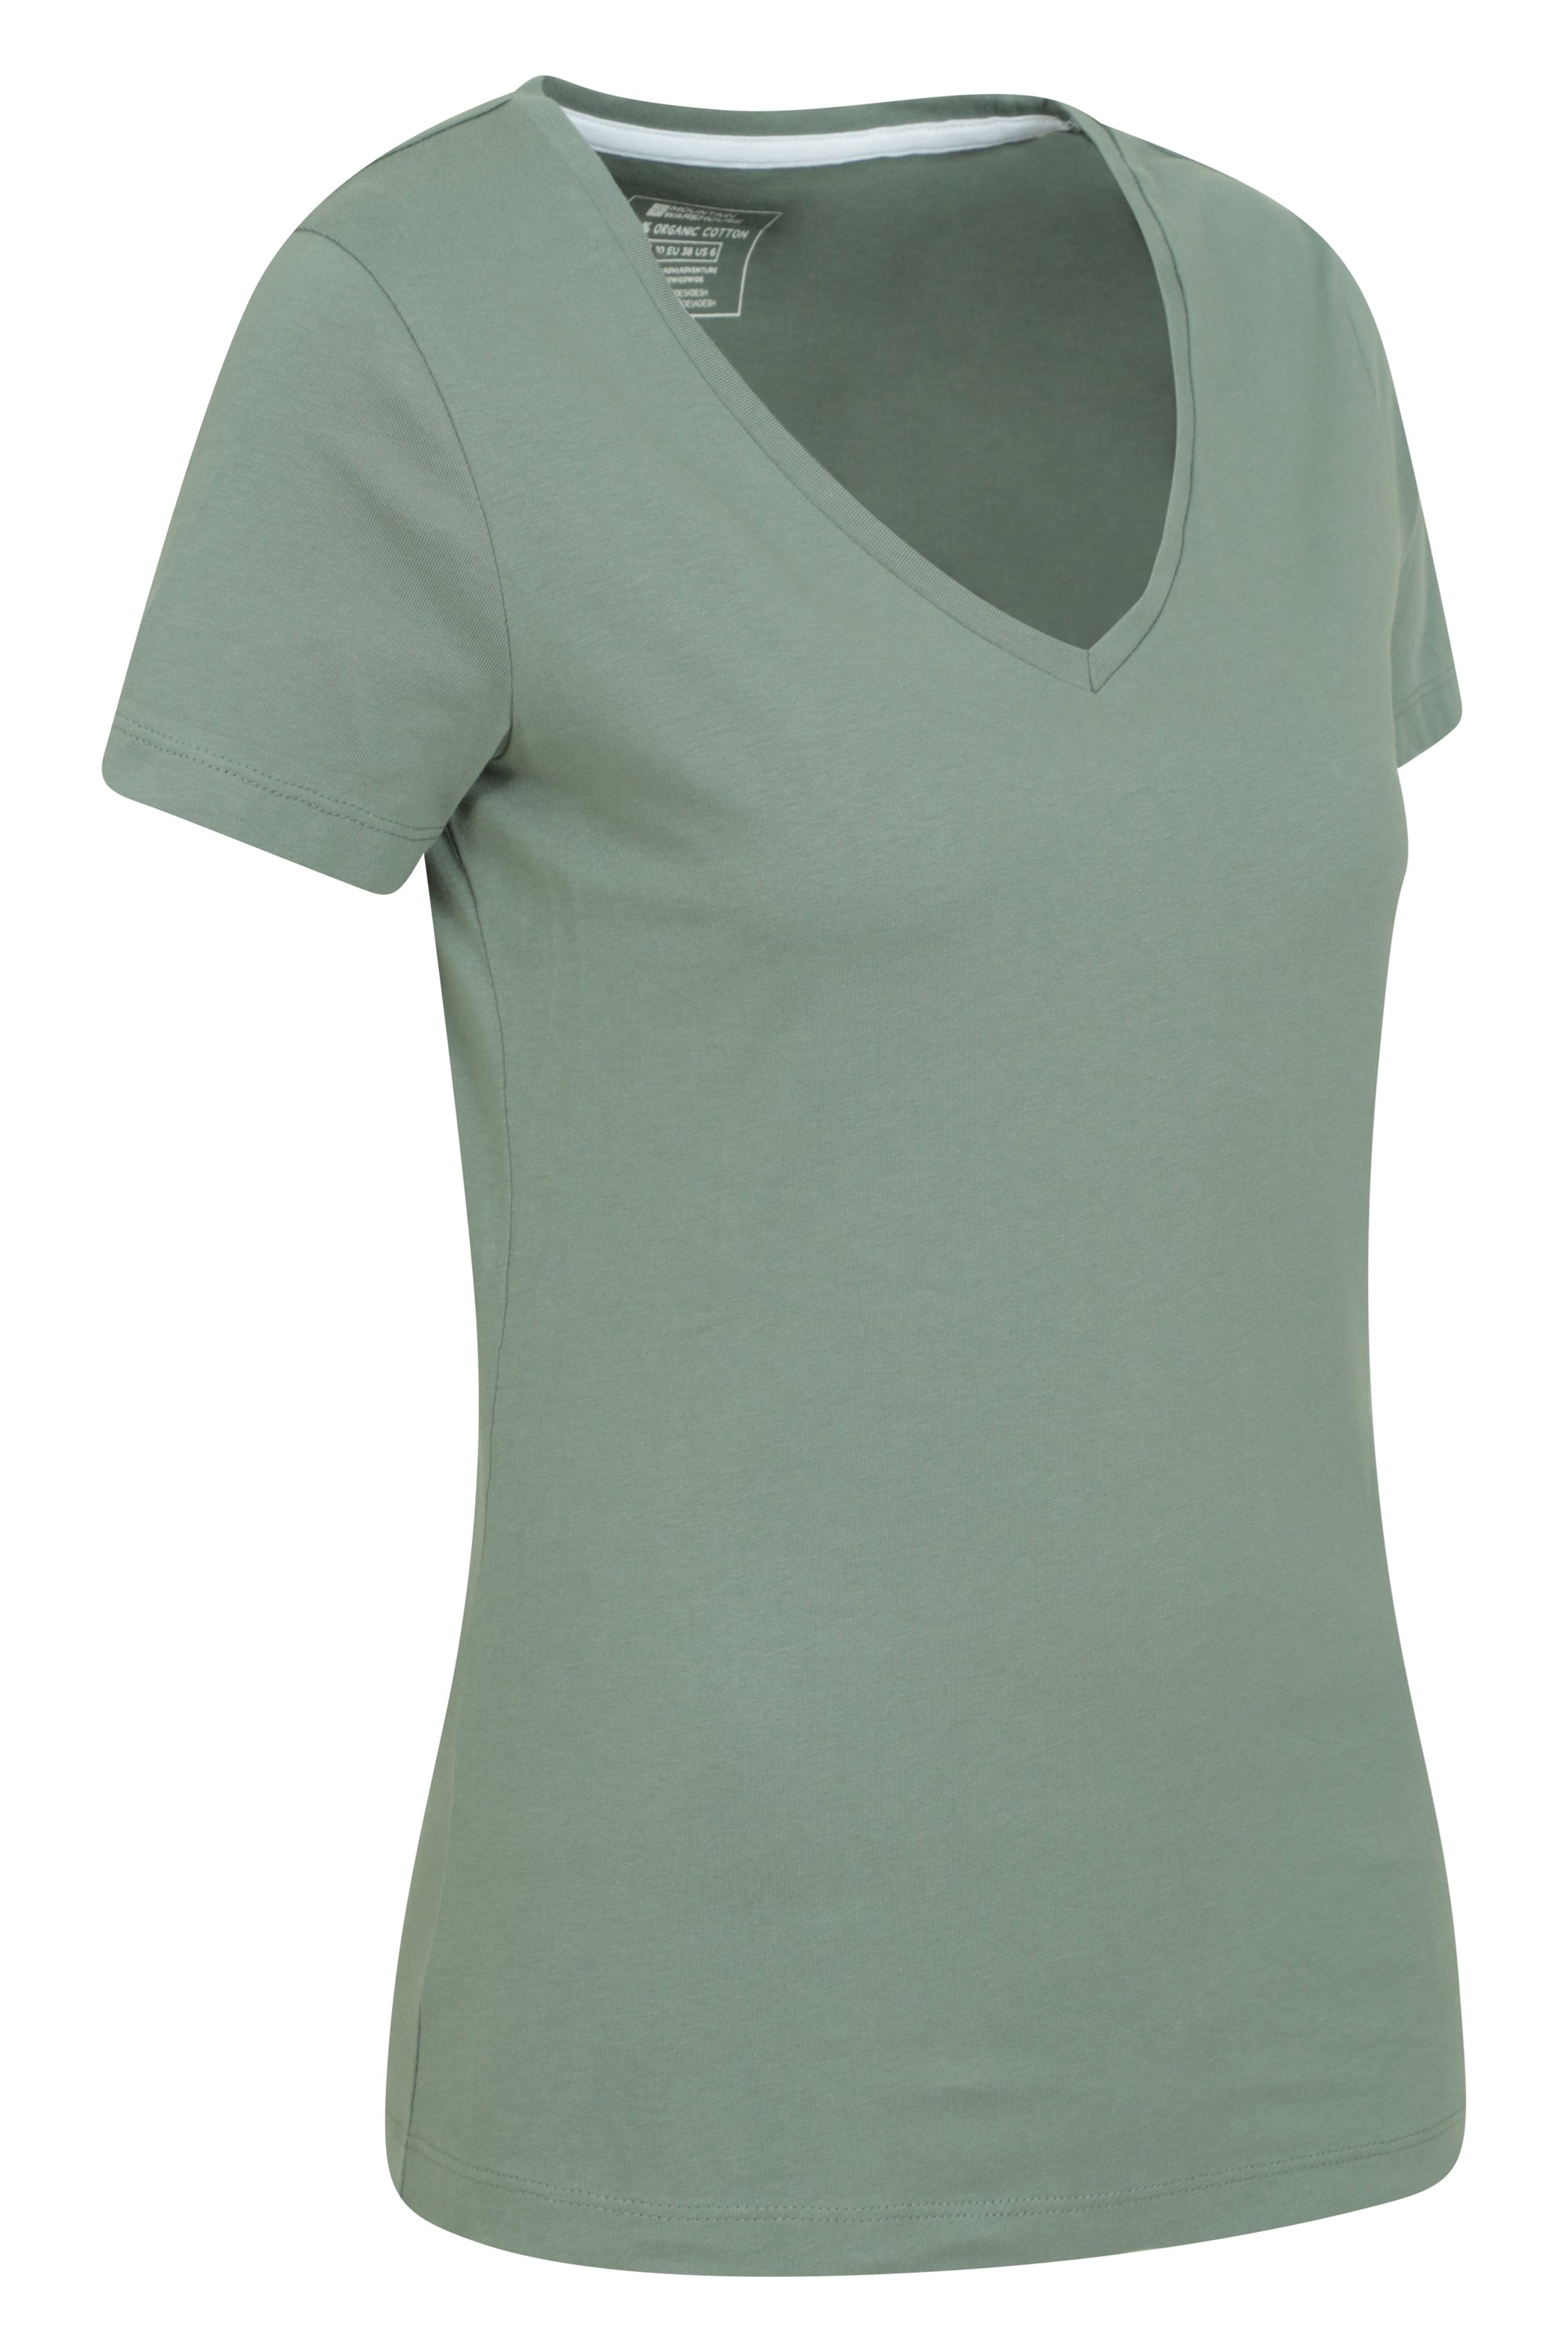 Mountain Warehouse Wms Enlighten Printed Womens Long Sleeved Tee Tshirt